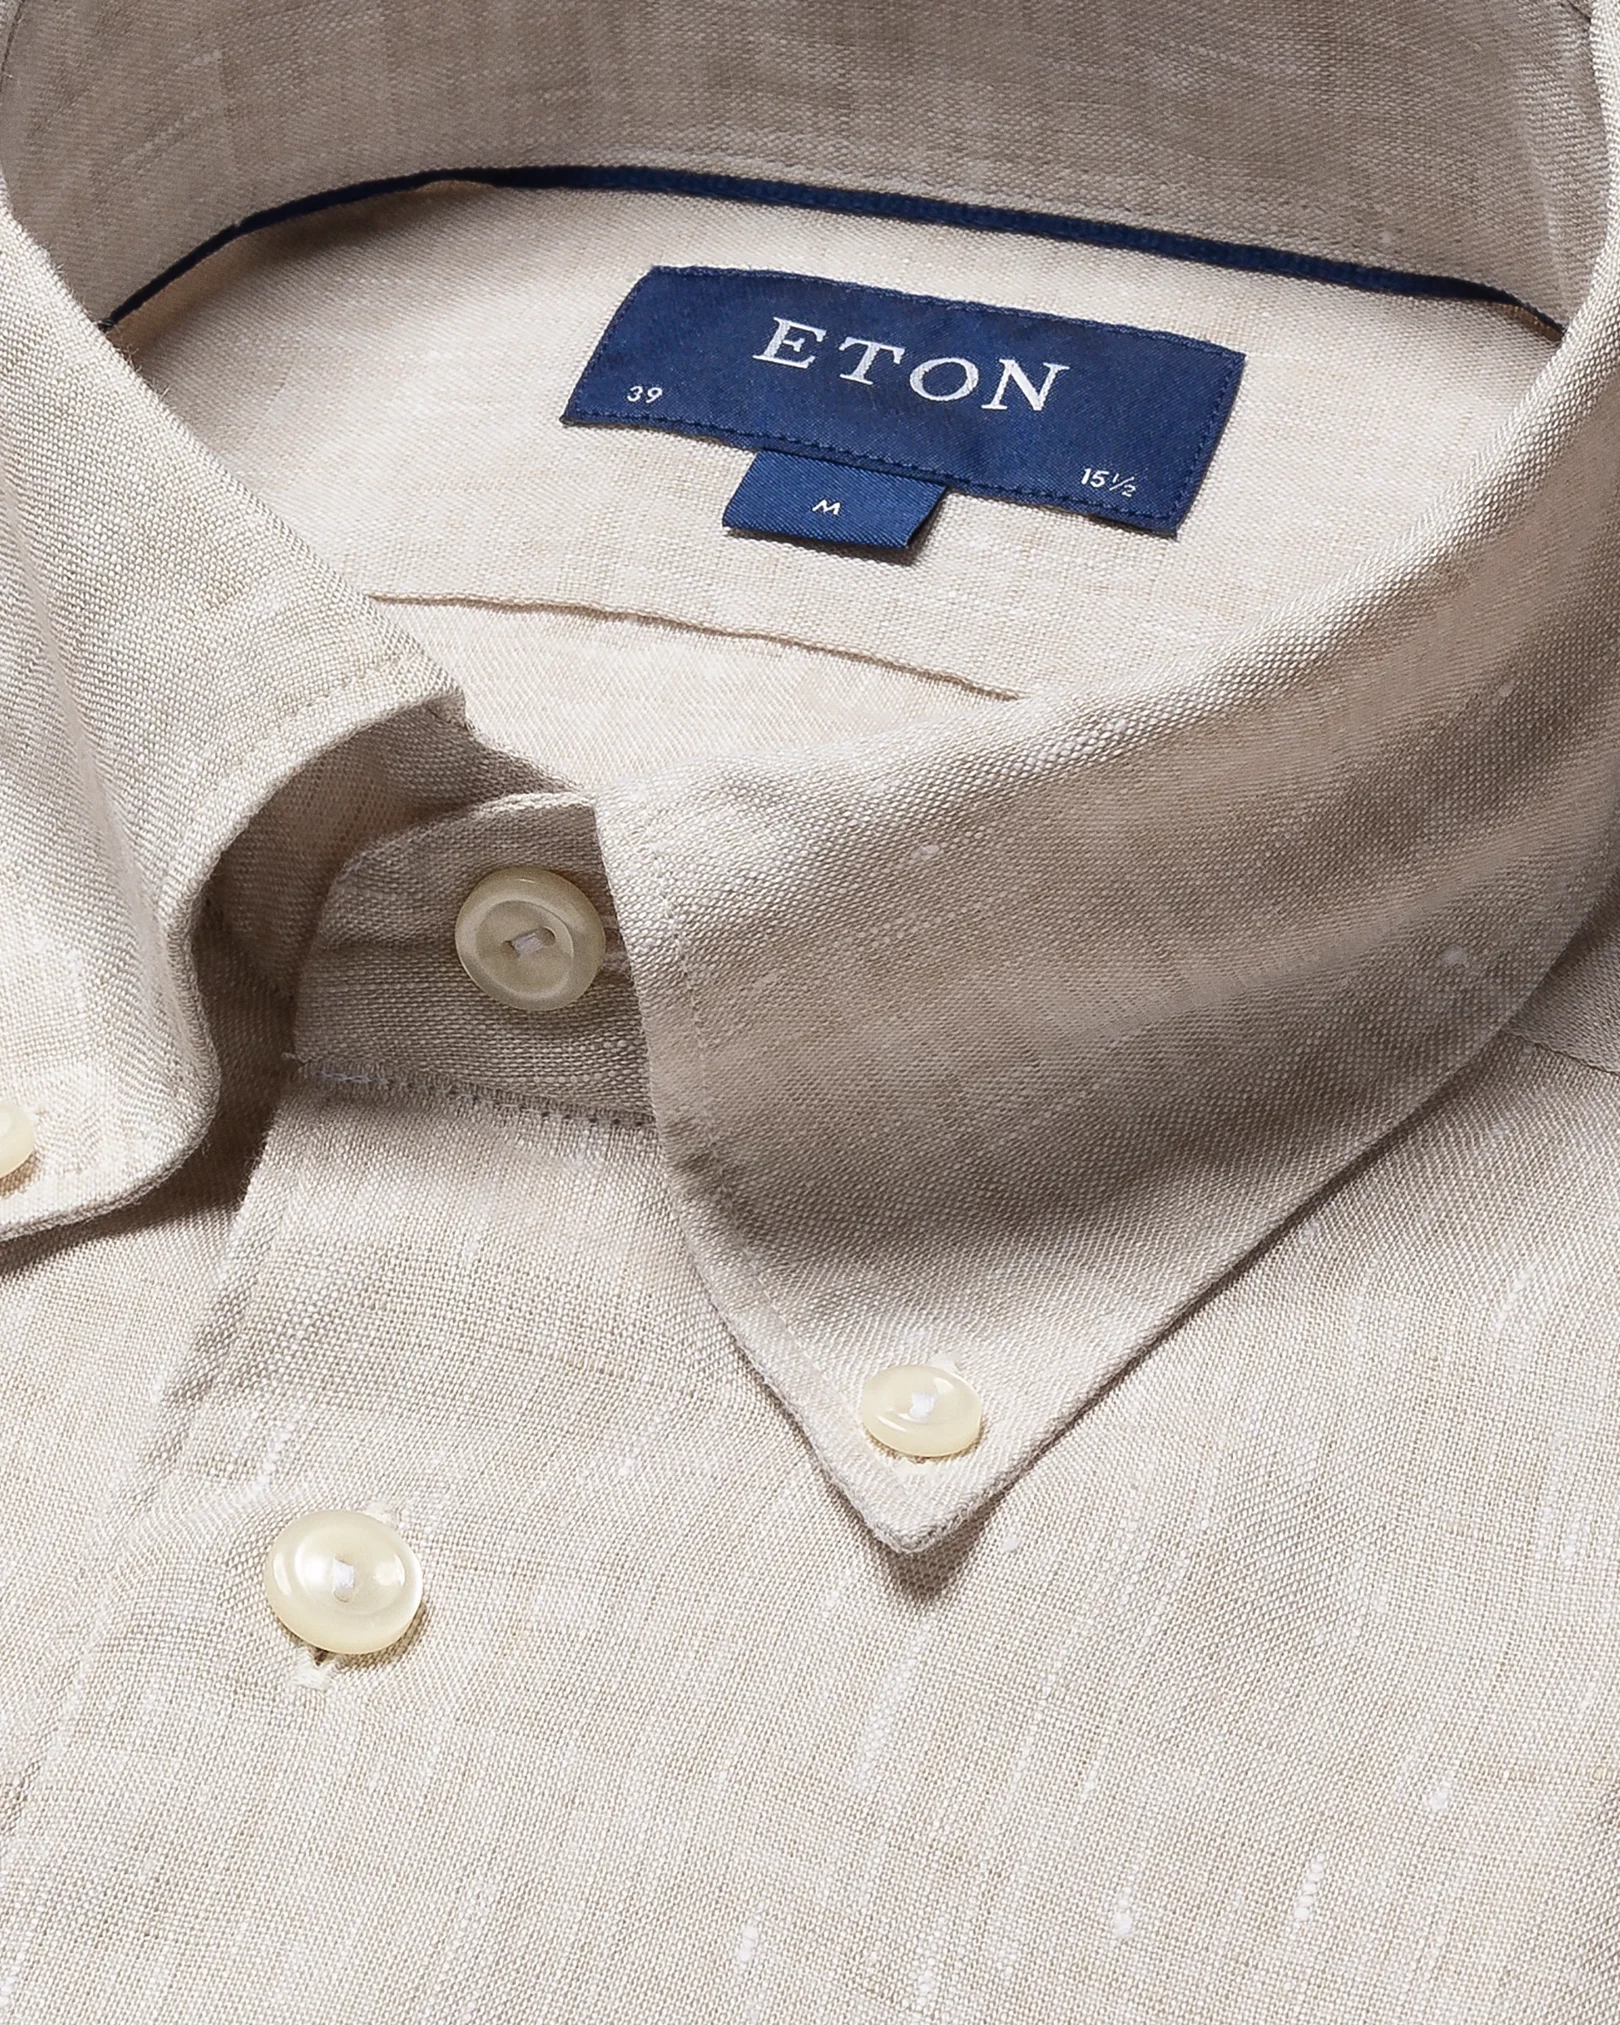 Eton - light grey linen button down